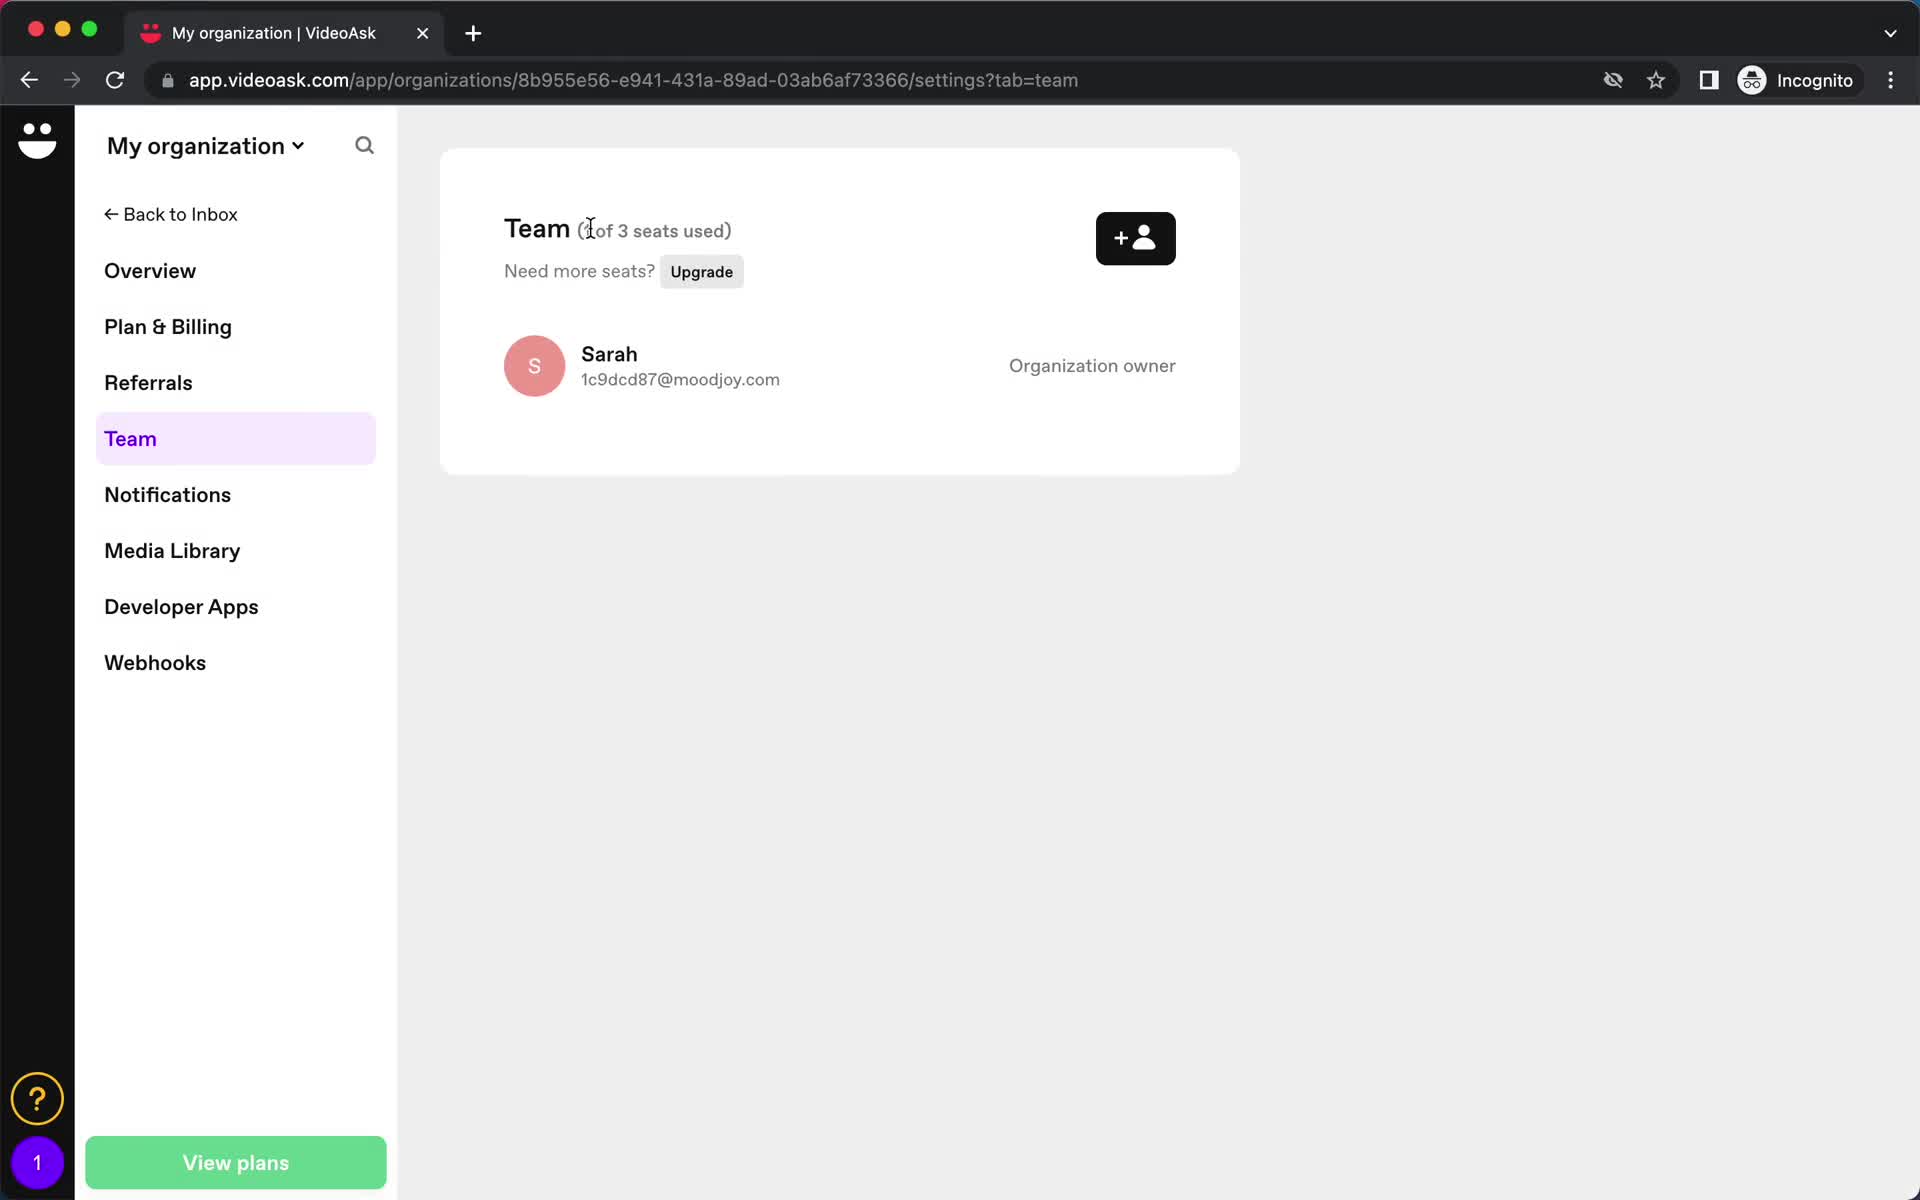 Screenshot of Team on Inviting people on VideoAsk user flow